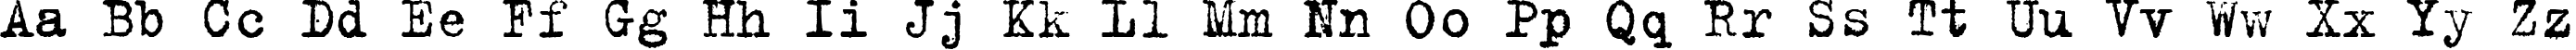 Пример написания английского алфавита шрифтом B52